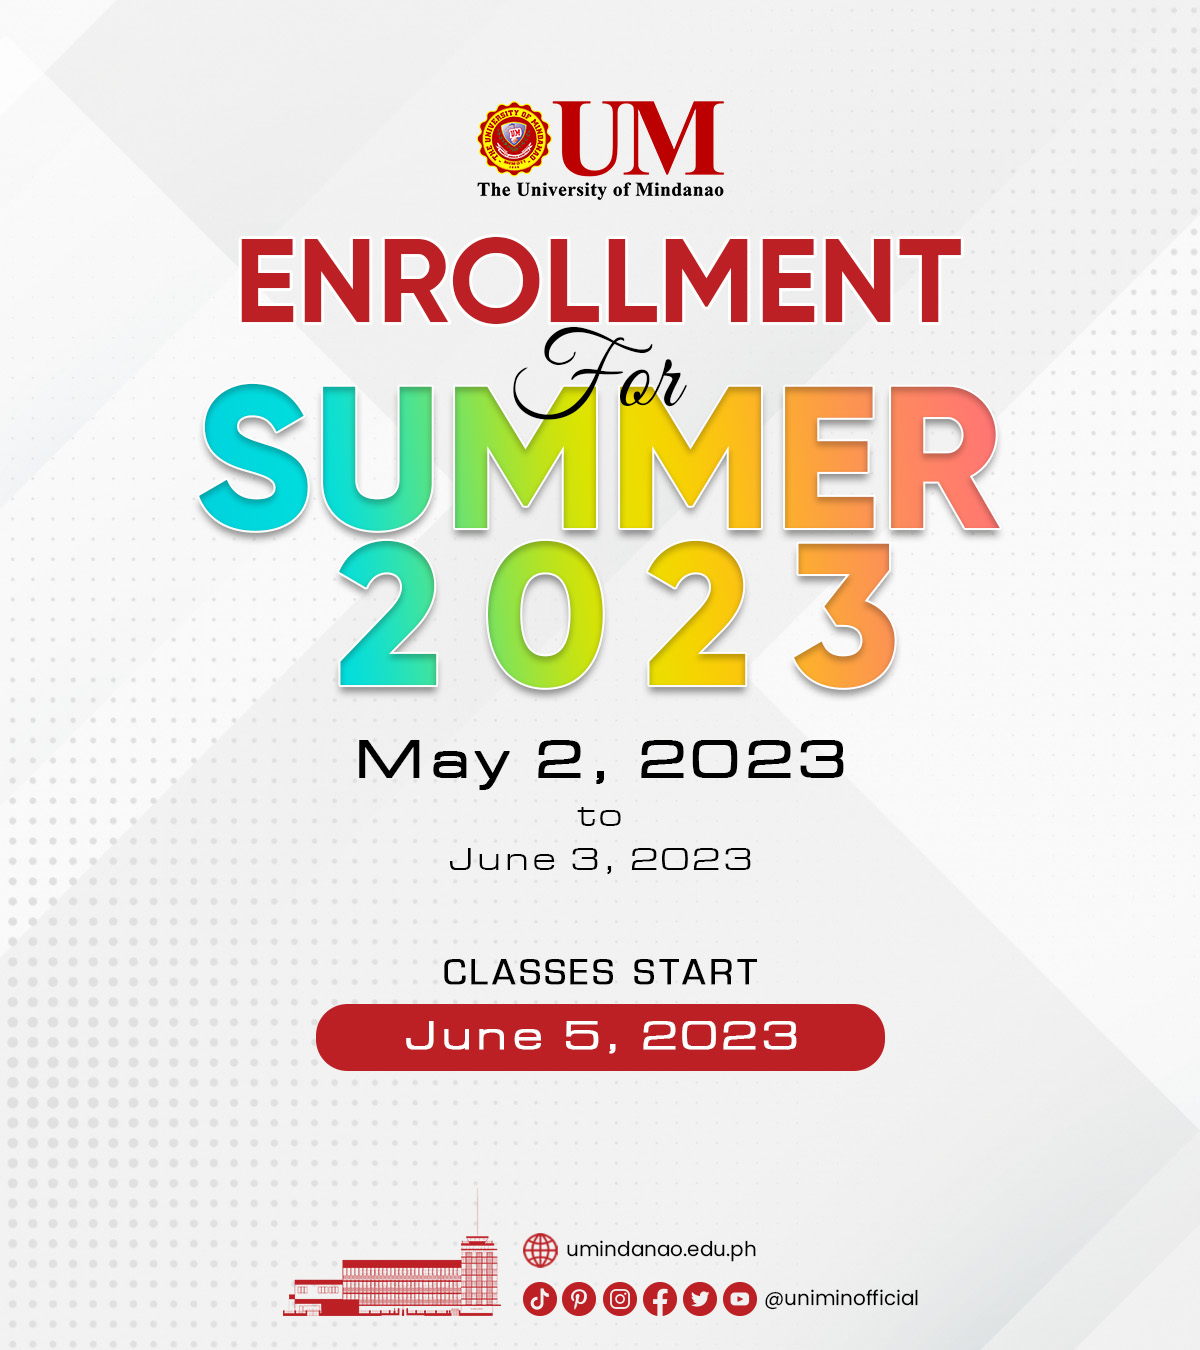 ANNOUNCEMENT: Advanced enrollment for SUMMER 2023